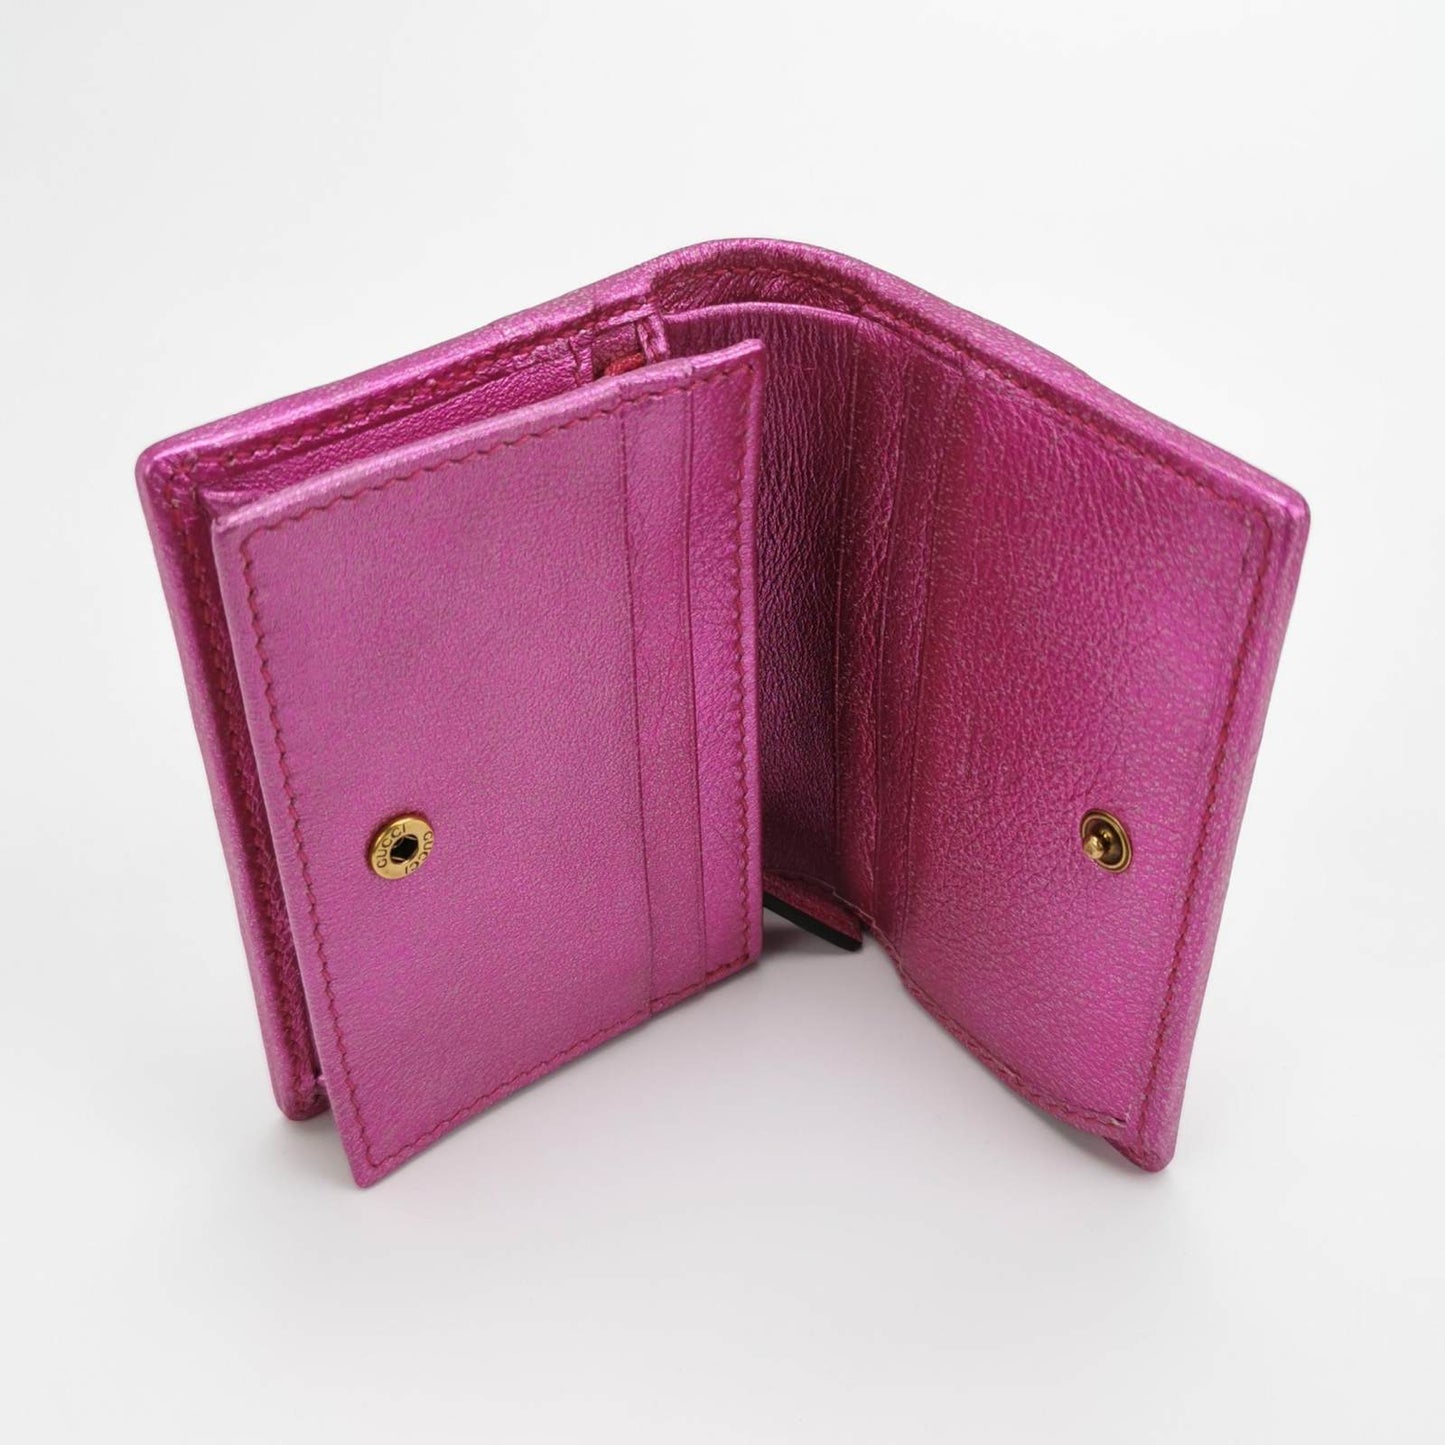 Gucci Zumi Pink Purple Leather Wallet